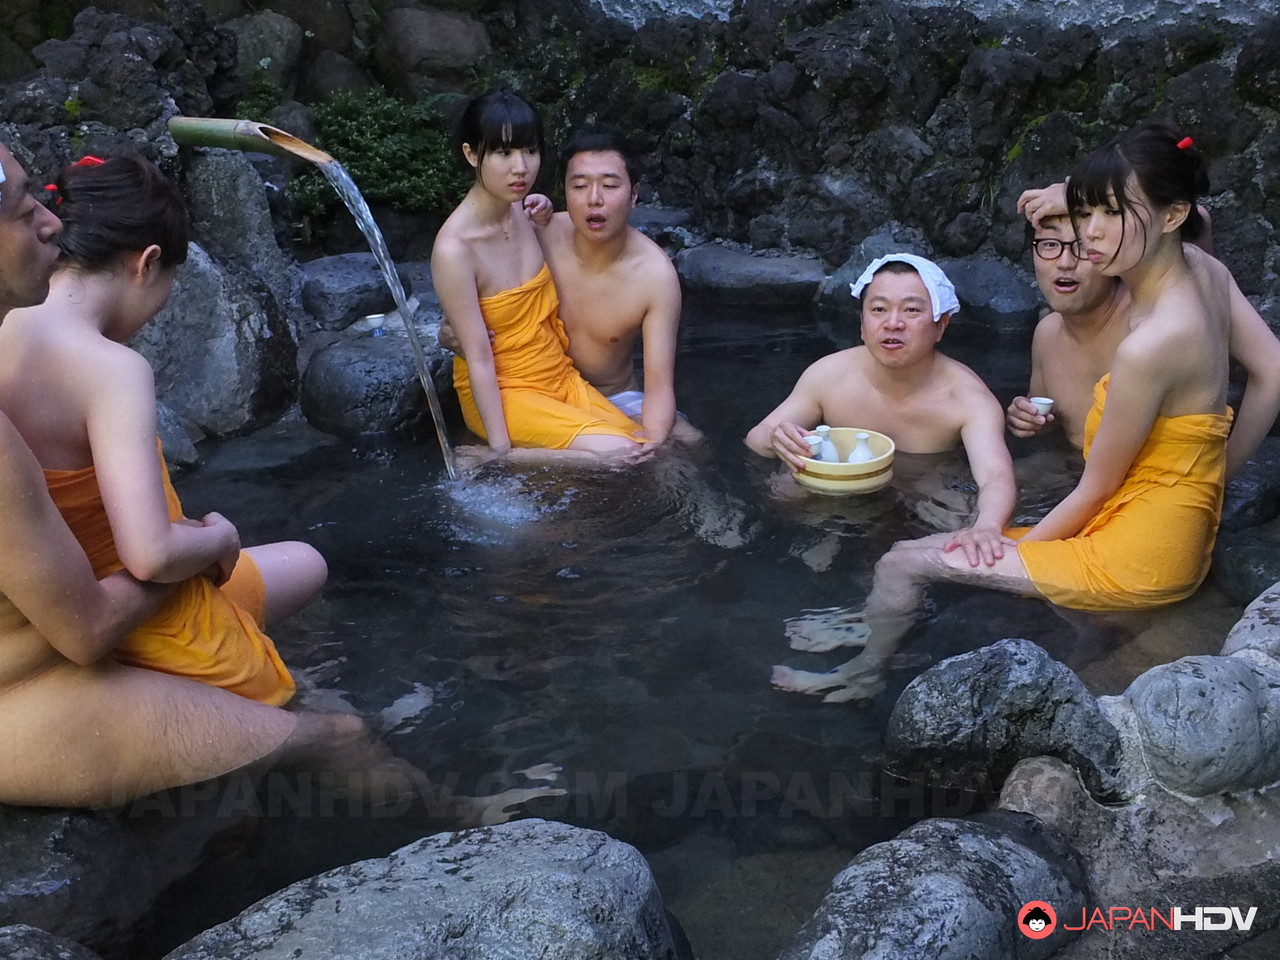 Three Japanese virgins get involved in an Asian orgy at the spa 色情照片 #428331197 | Japan HDV Pics, Jyuri Ayase, Nozomi Koizumi, Yuuko Kohinata, Japanese, 手机色情